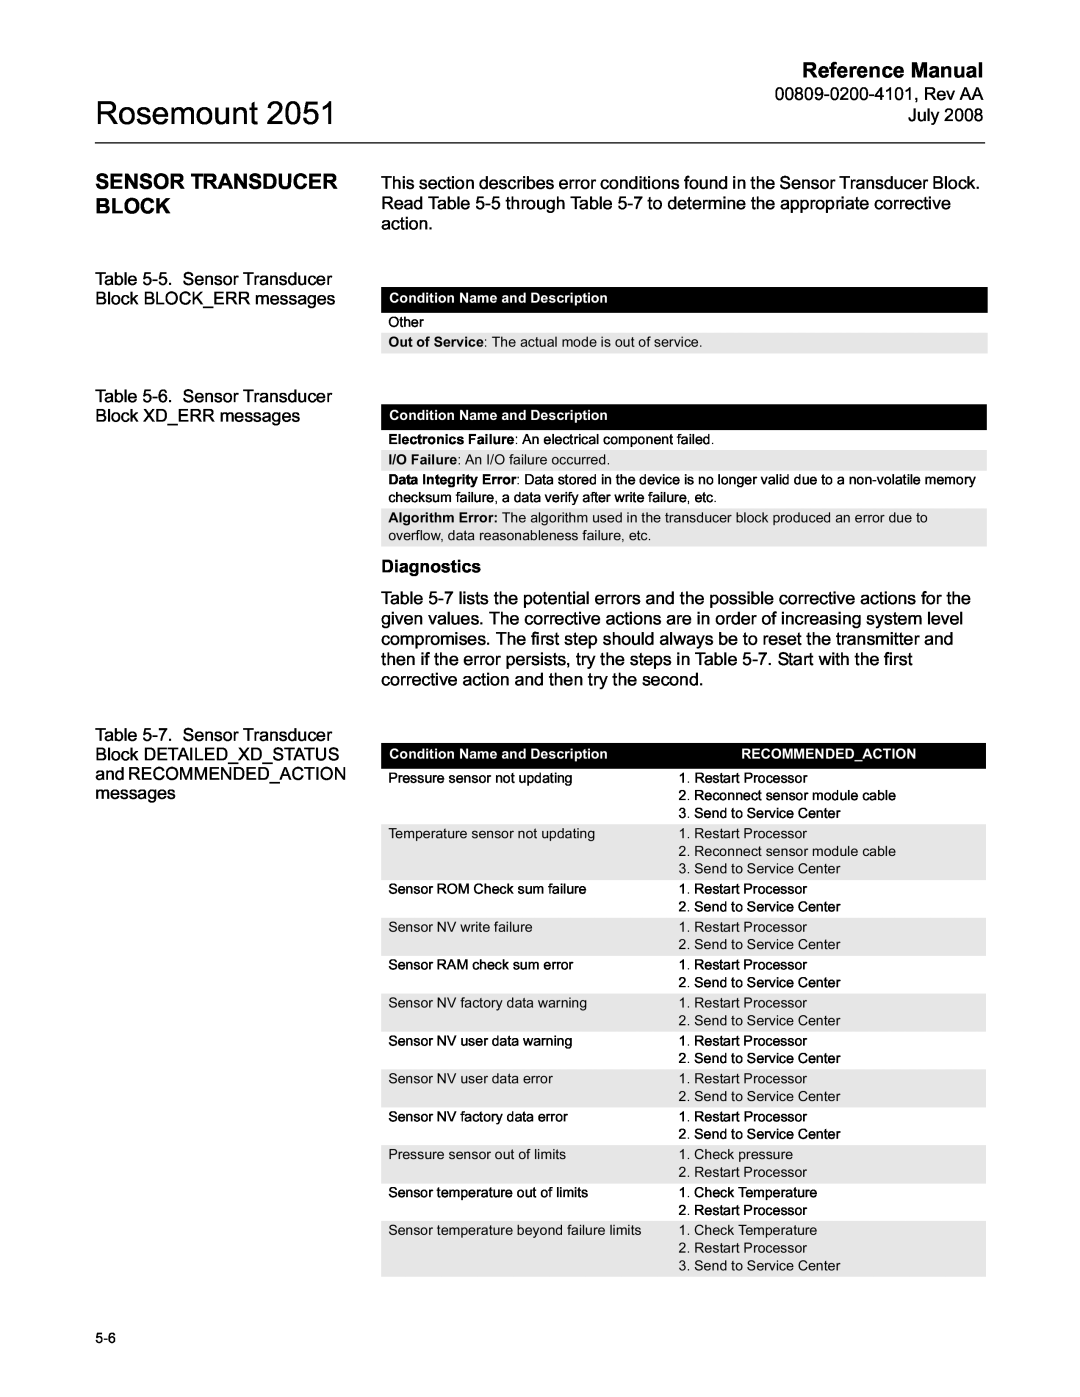 Emerson Process Management 2051 manual Sensor Transducer Block, Rosemount, Reference Manual 